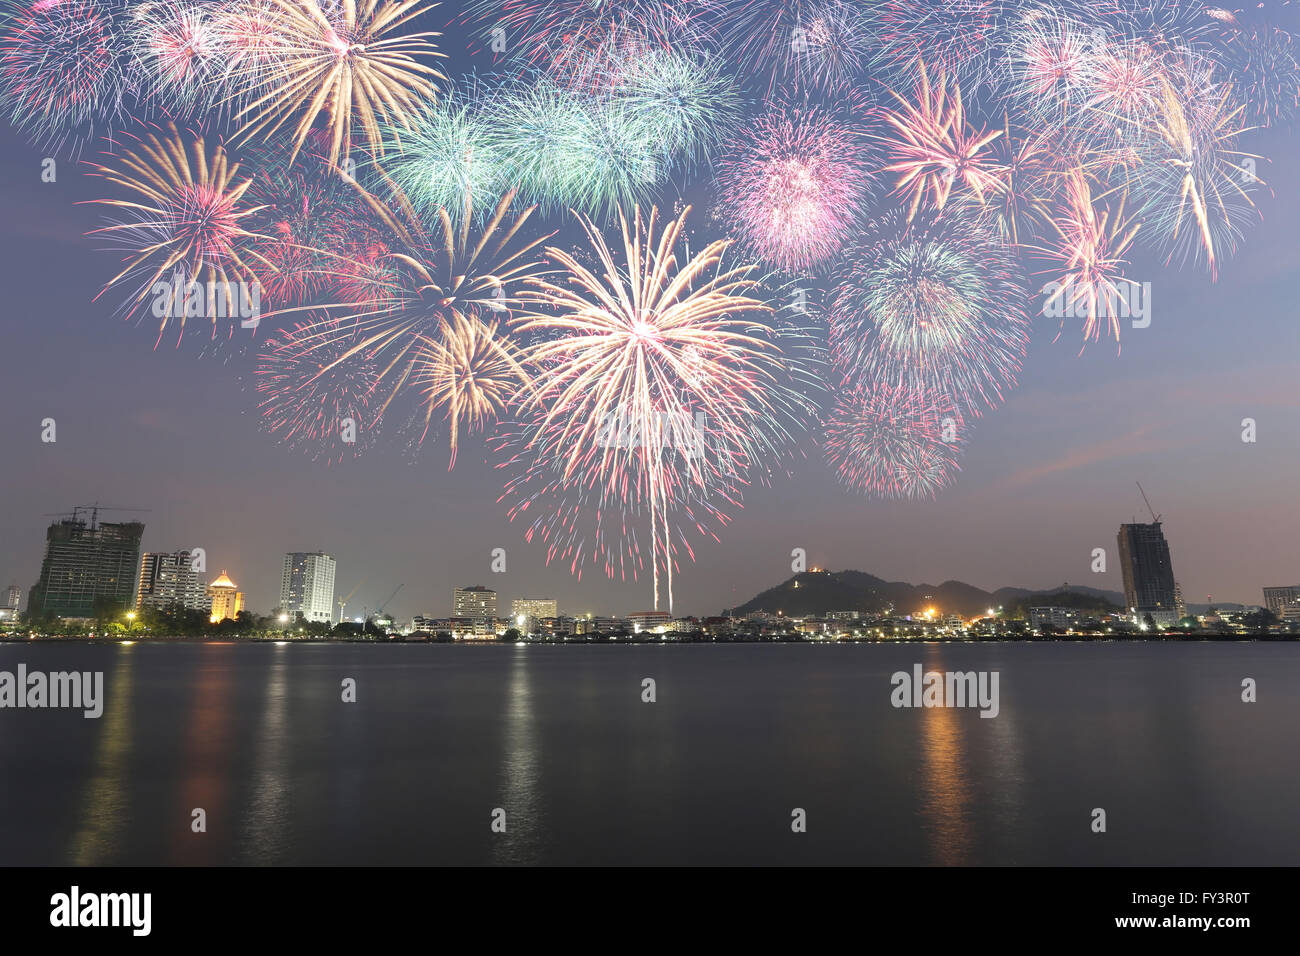 Seaside town of Thailand with fireworks celebrating the New Year,Sriracha Chouburi. Stock Photo